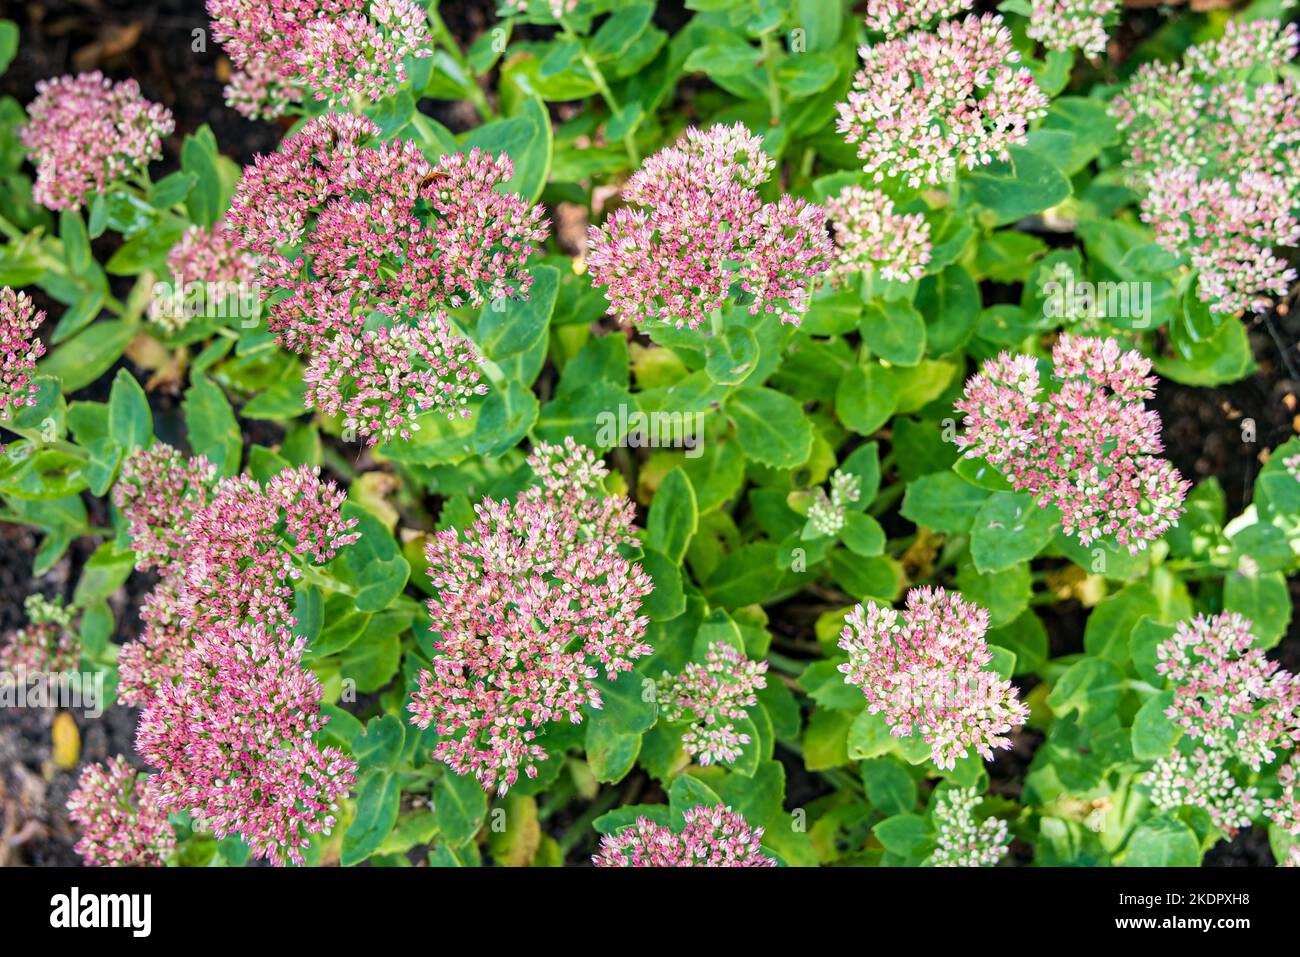 Sedum flowers with ornamental grassin in garden Stock Photo